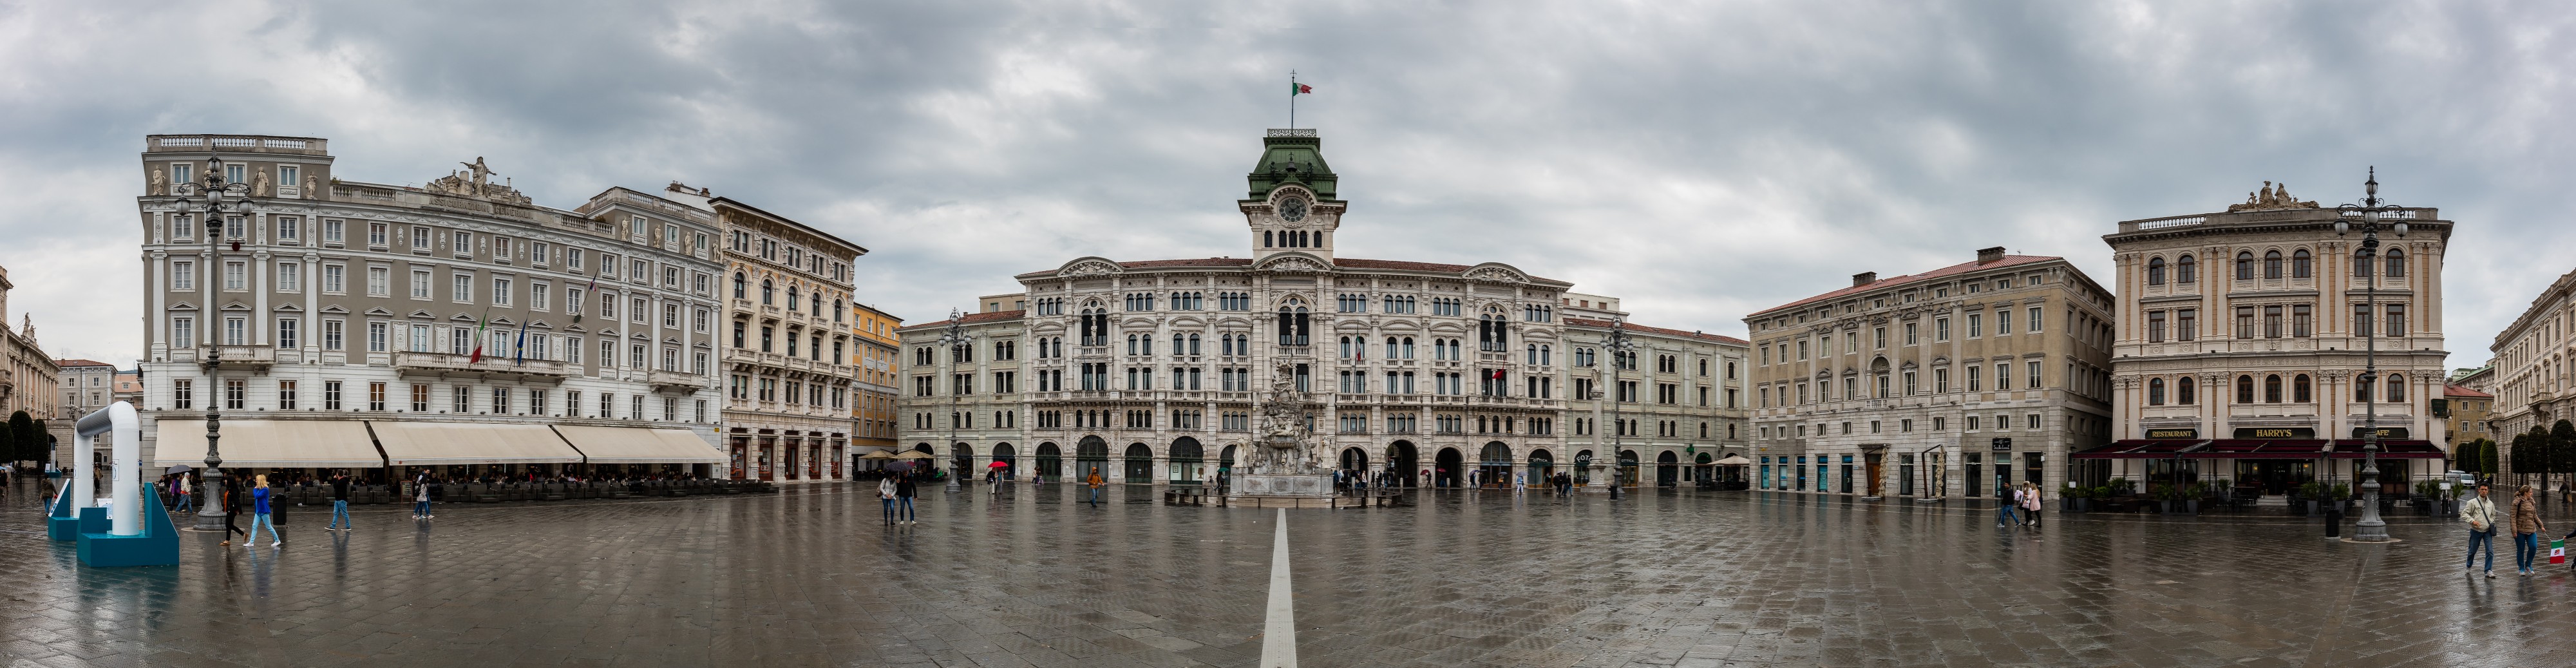 Plaza de la Unidad de Italia, Trieste, Italia, 2017-04-15, DD 11-15 HDR